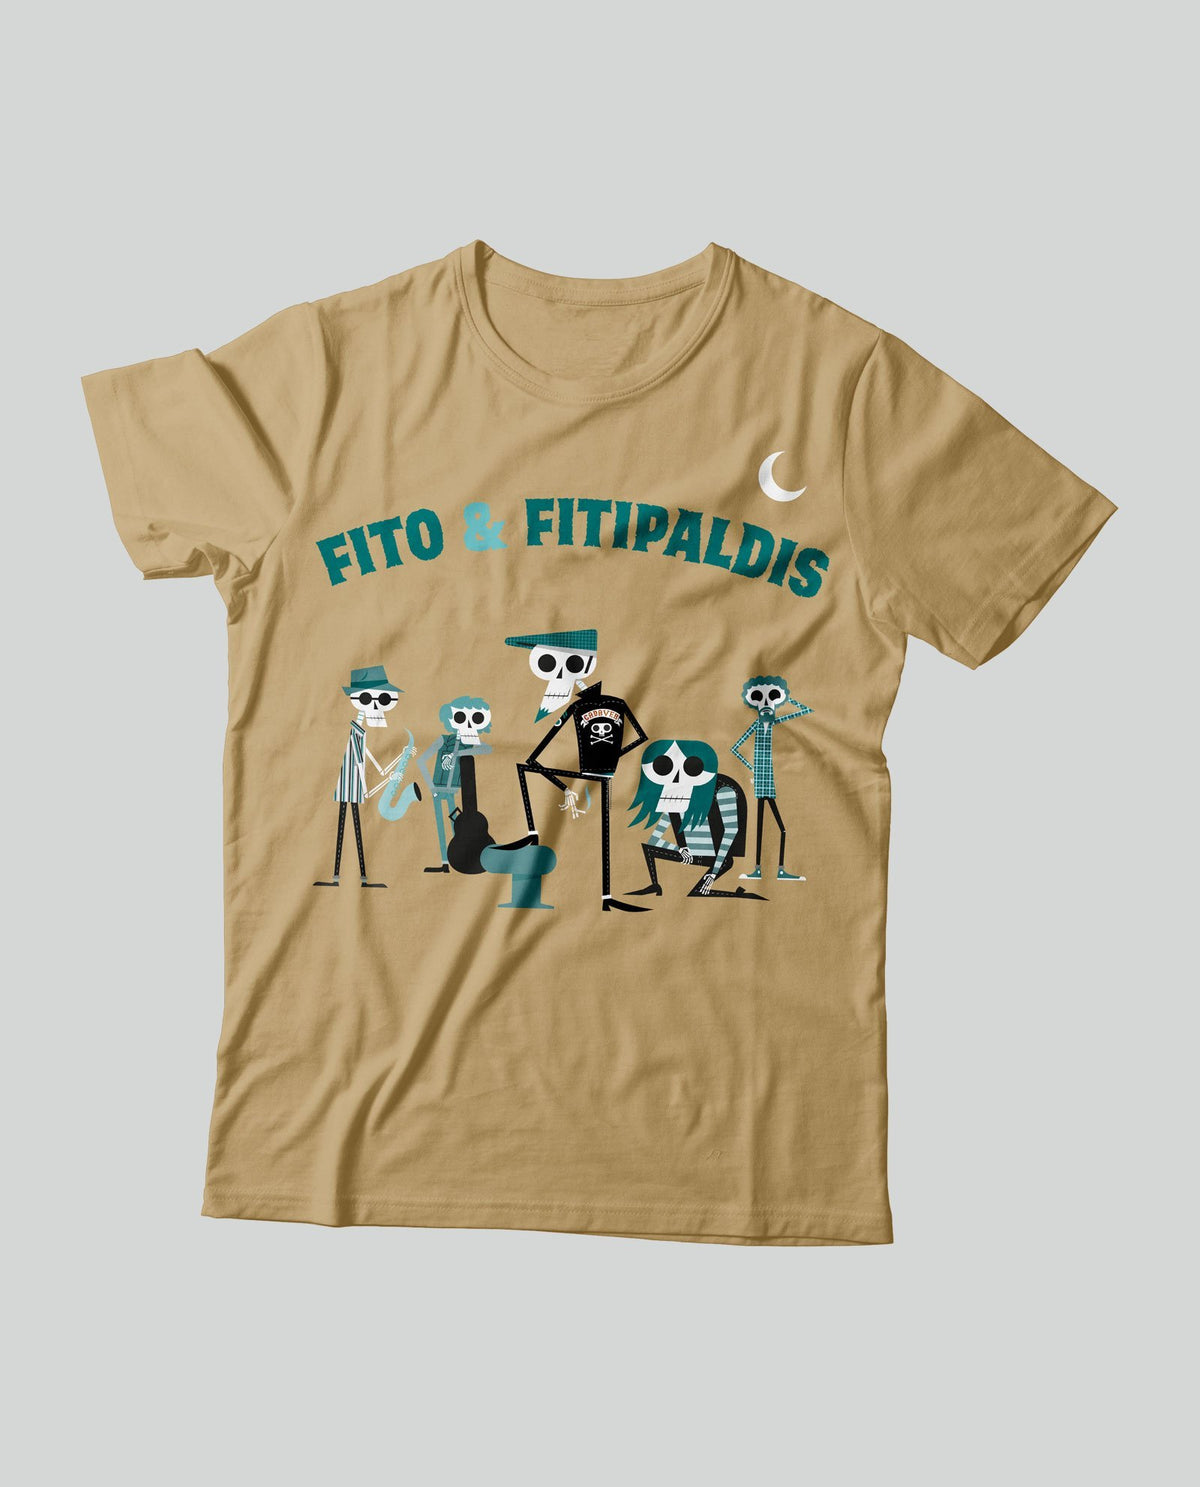 Camiseta "Fitipaldis" Unisex - Rocktud - Fito y Fitipaldis